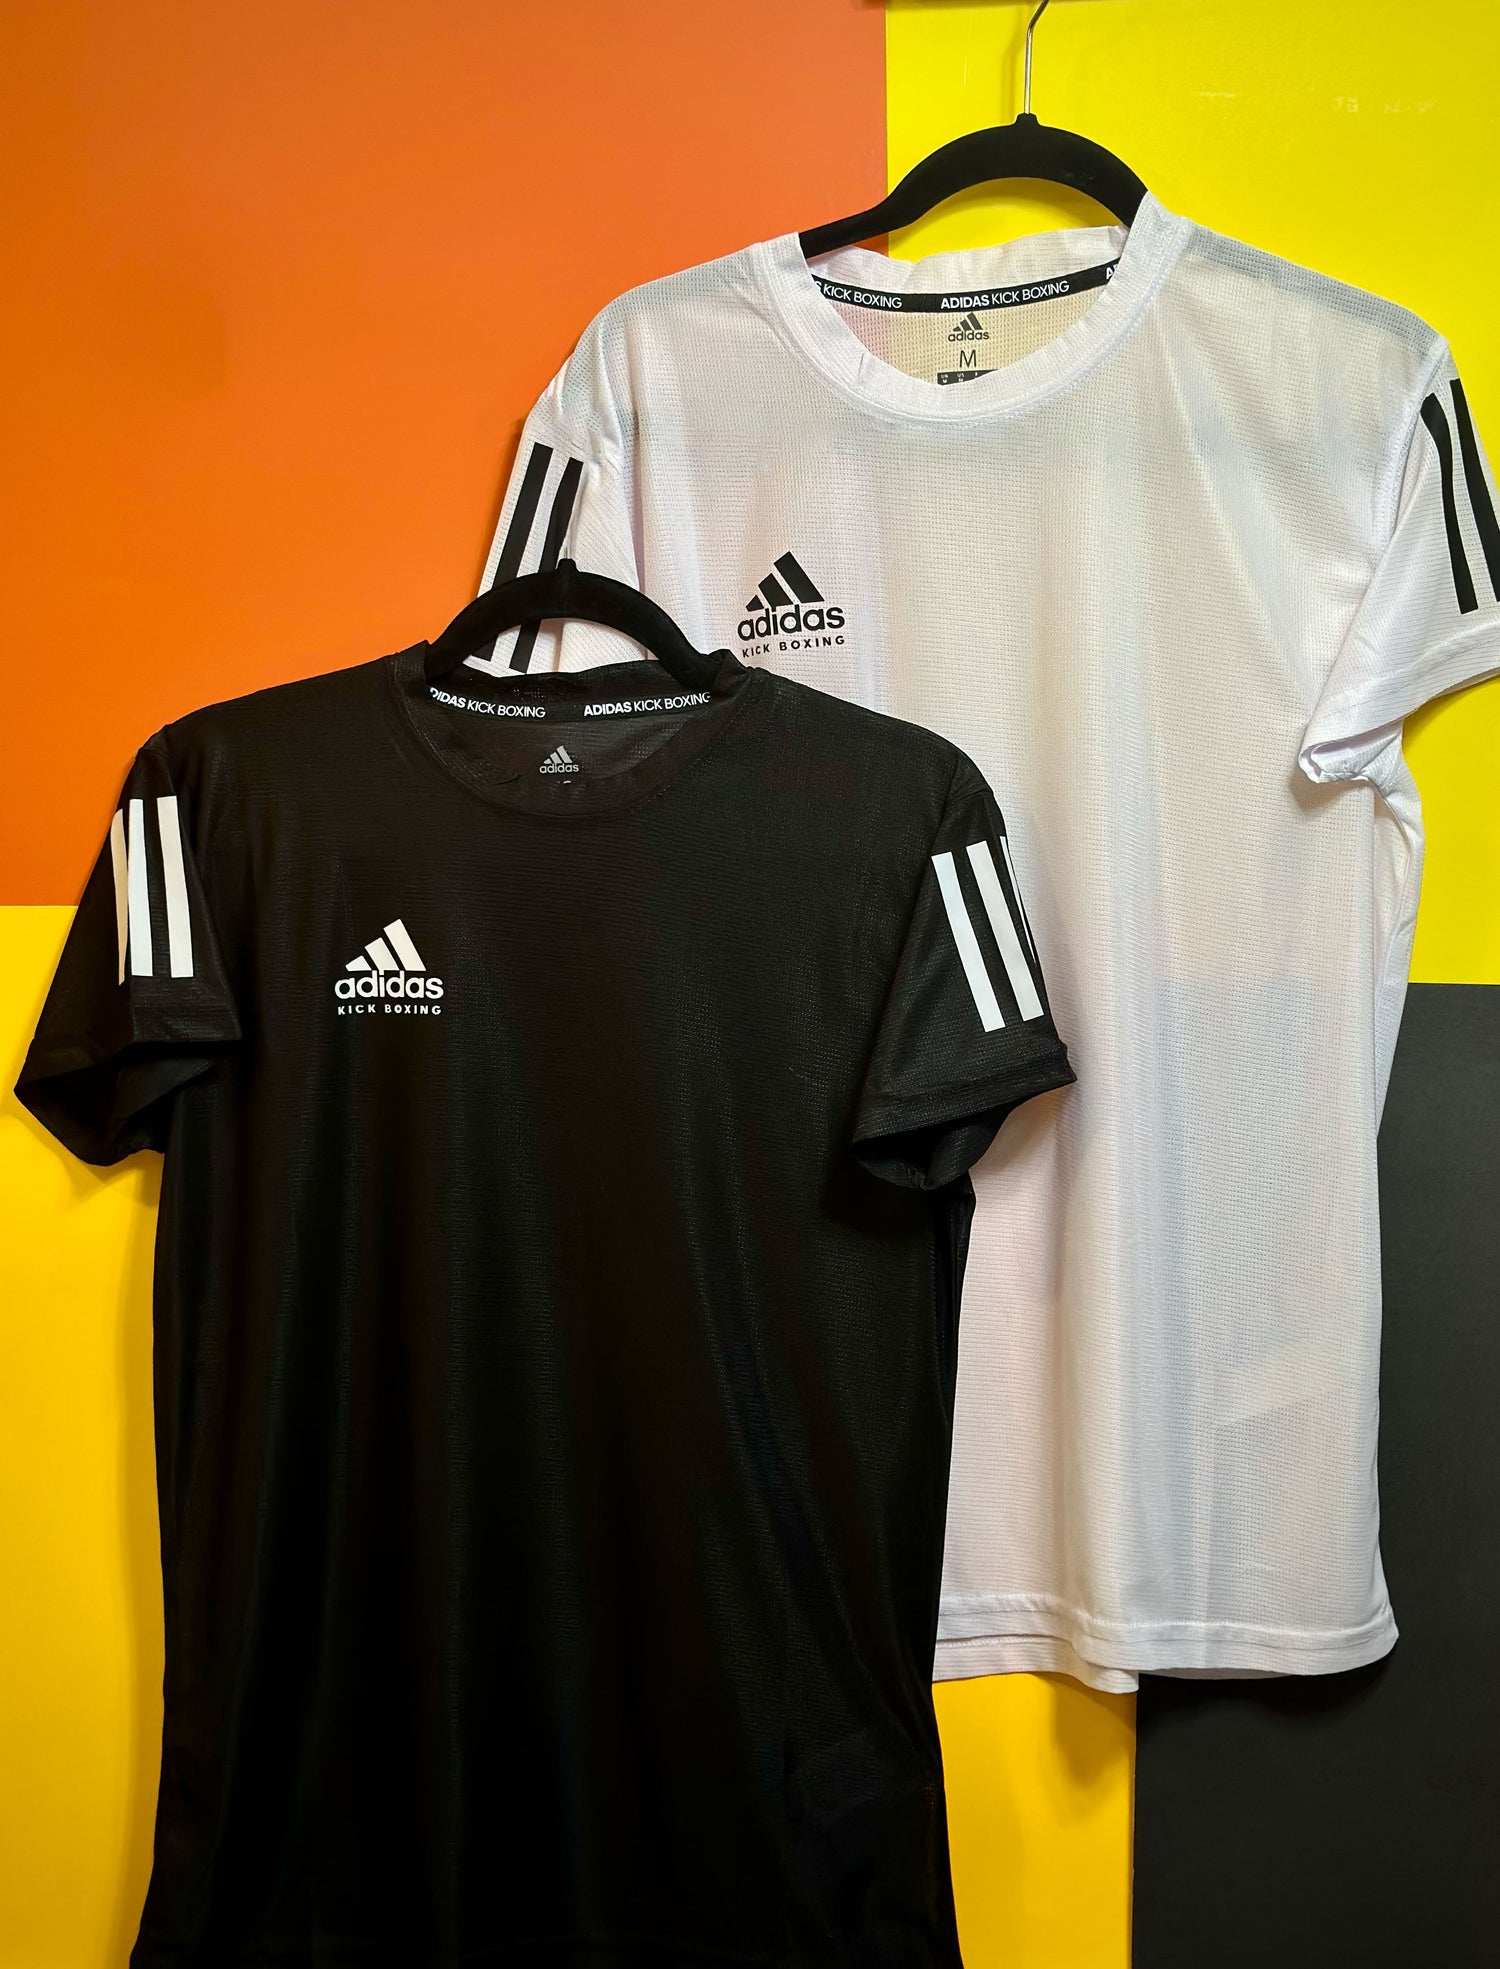 Adidas Unisex Basic Kickboxing T-Shirt adiKBTS100, Moisture-Wicking Polyester, Black and White colors, XS to XXL sizes